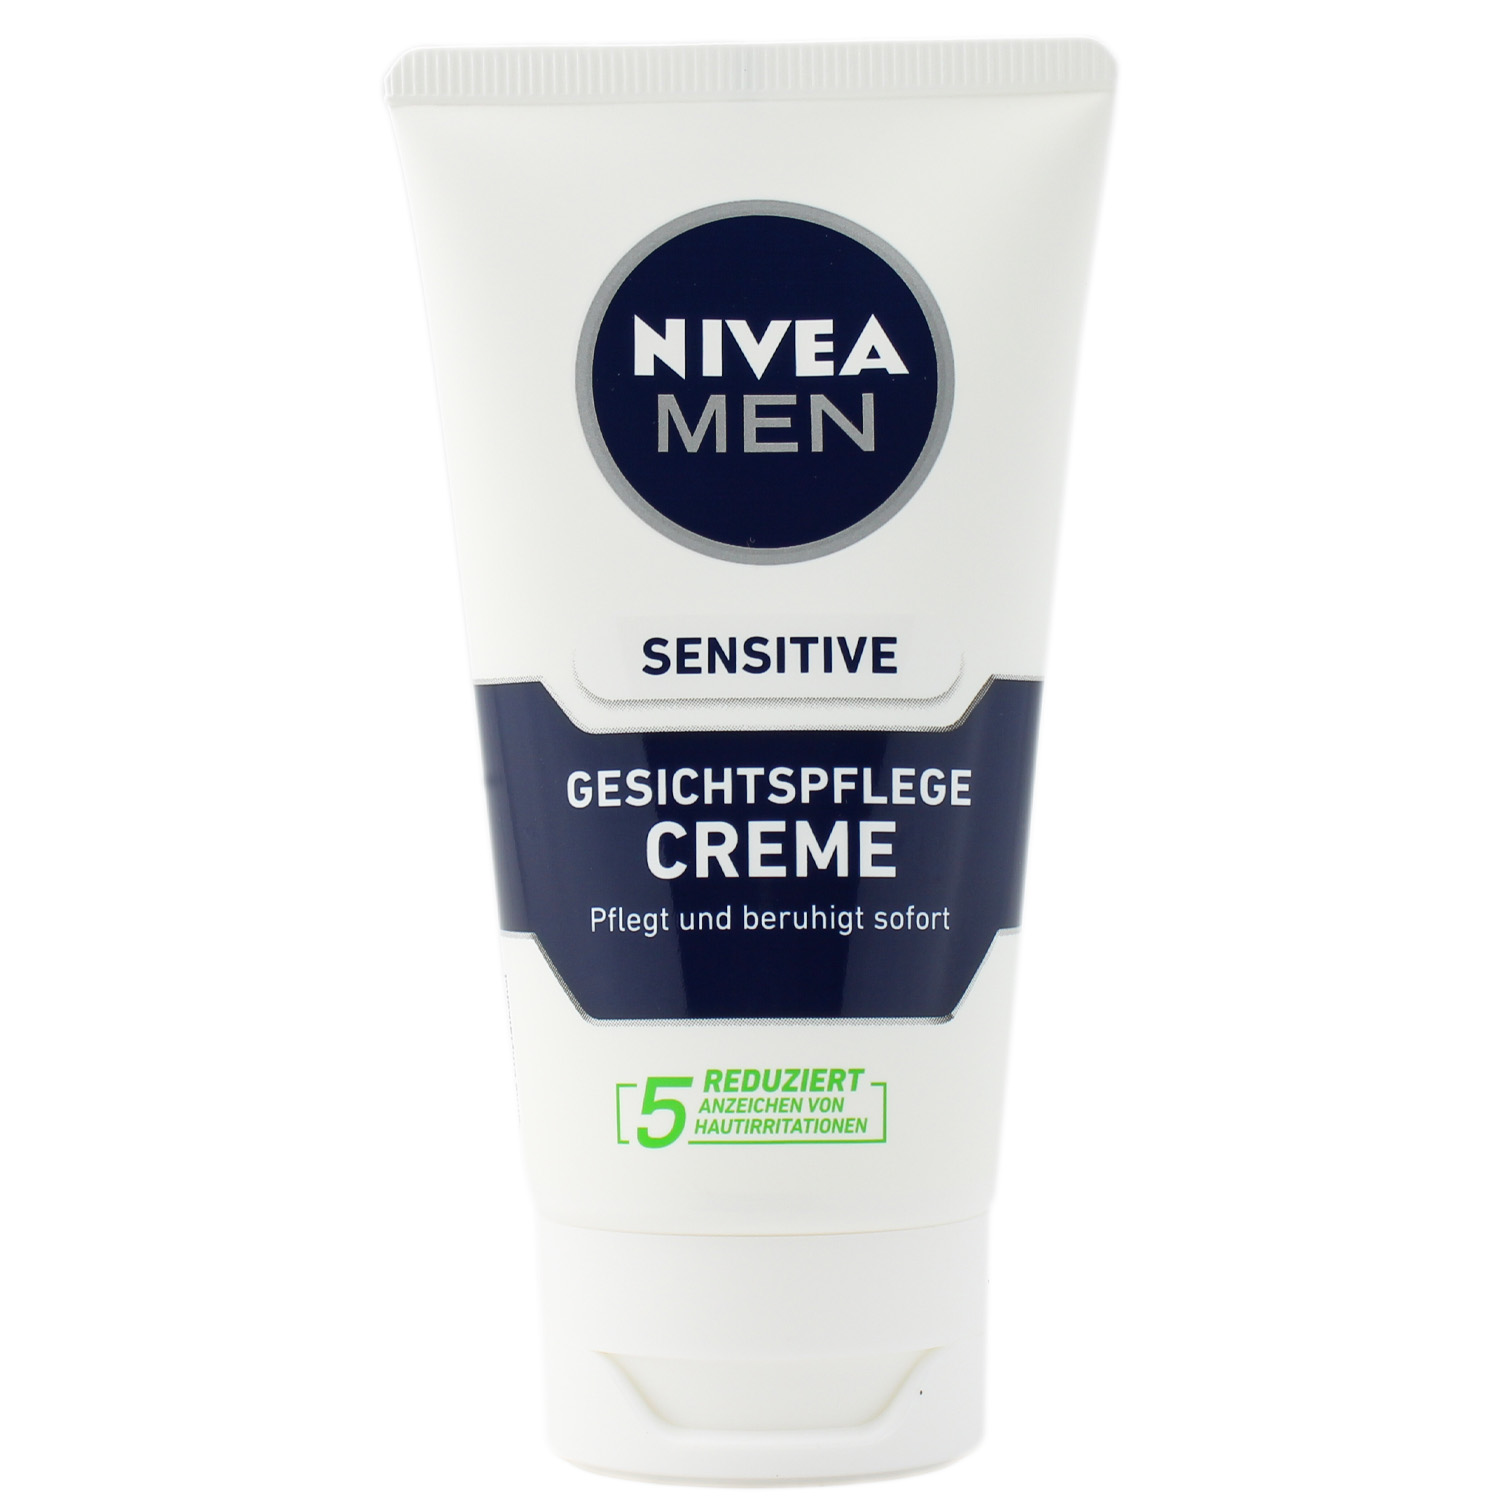 Nivea Men Sensitive Gesichtspflege Creme 75ml